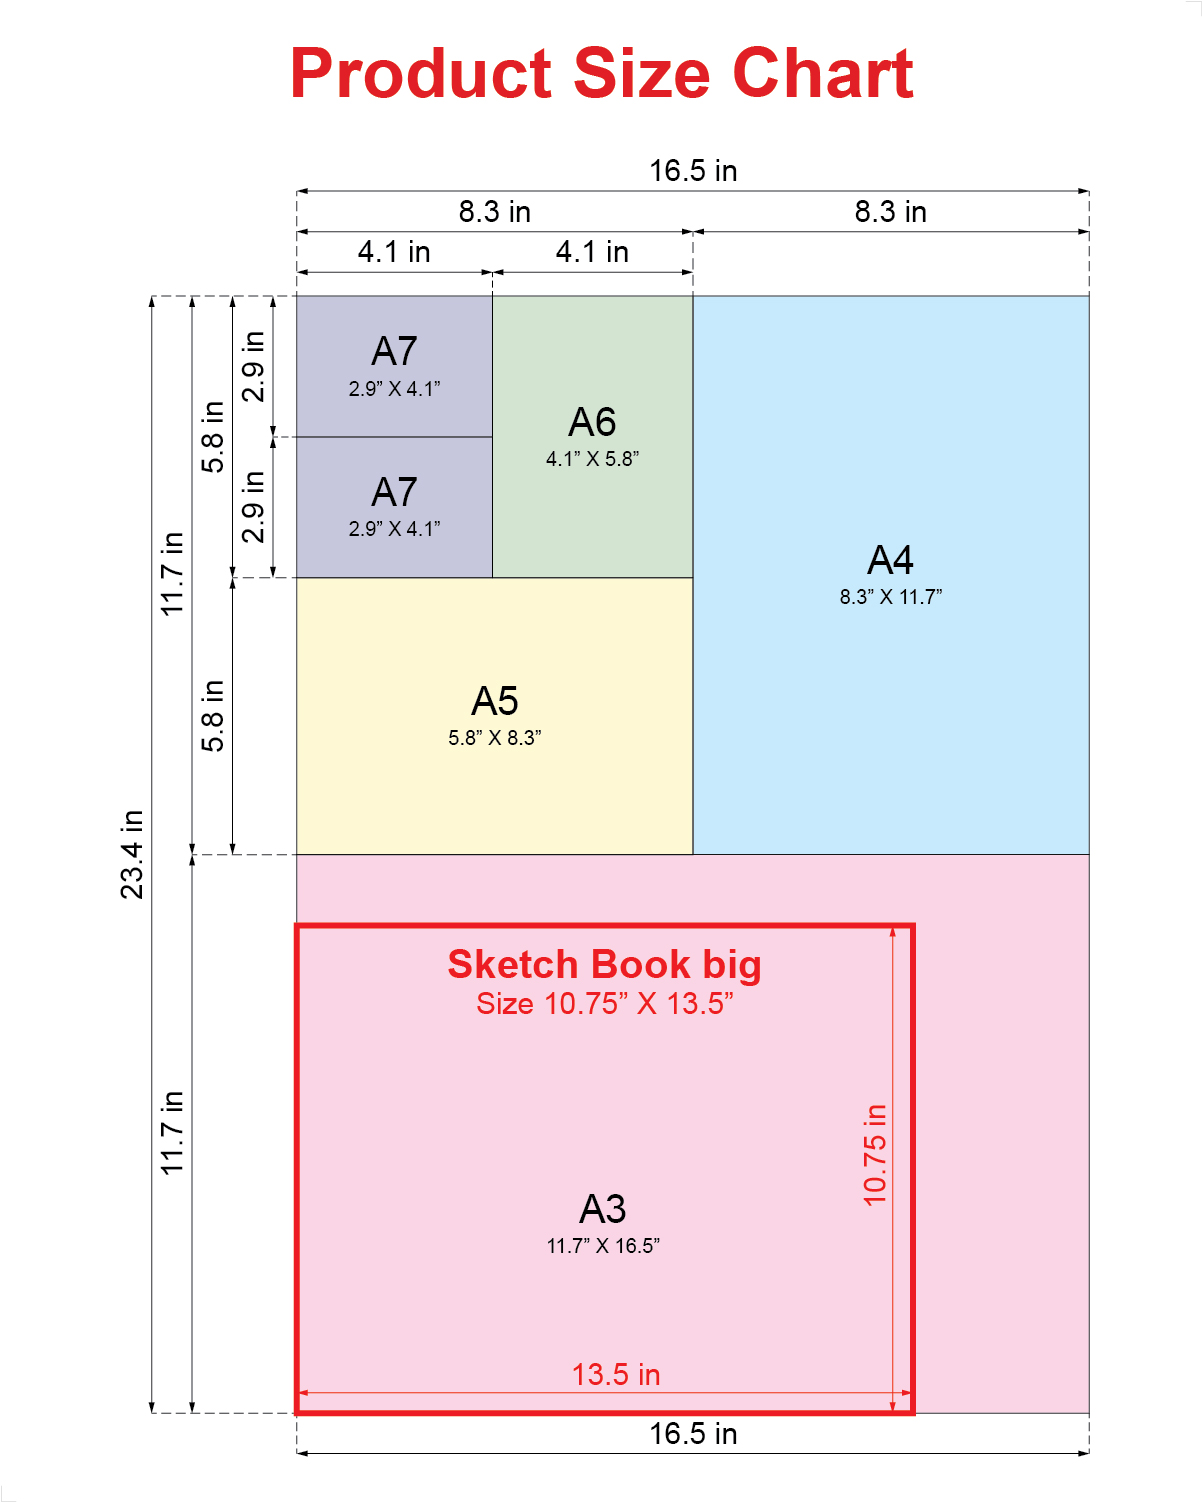 Sketch Book - Big Size - 20 Sheets - HB